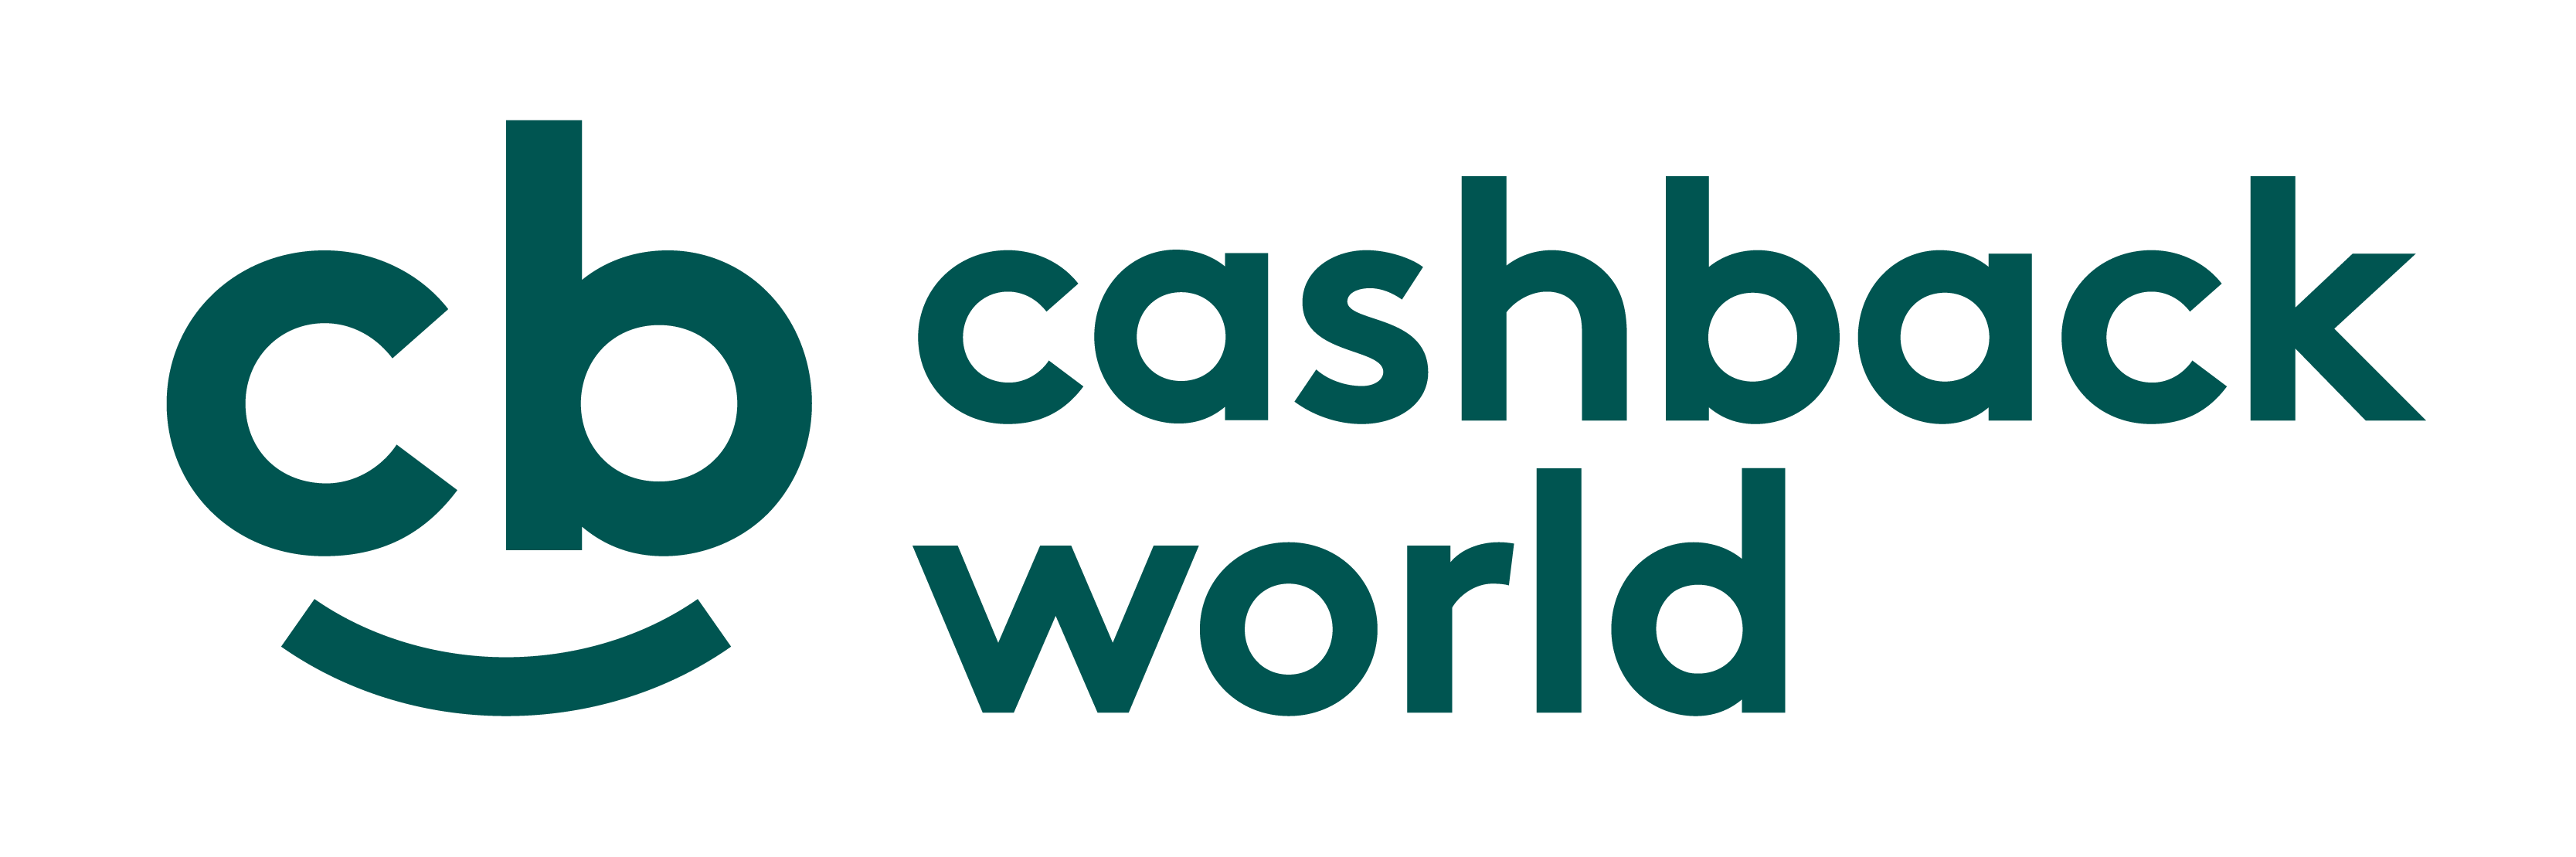 Cashback World Logo Em Quality